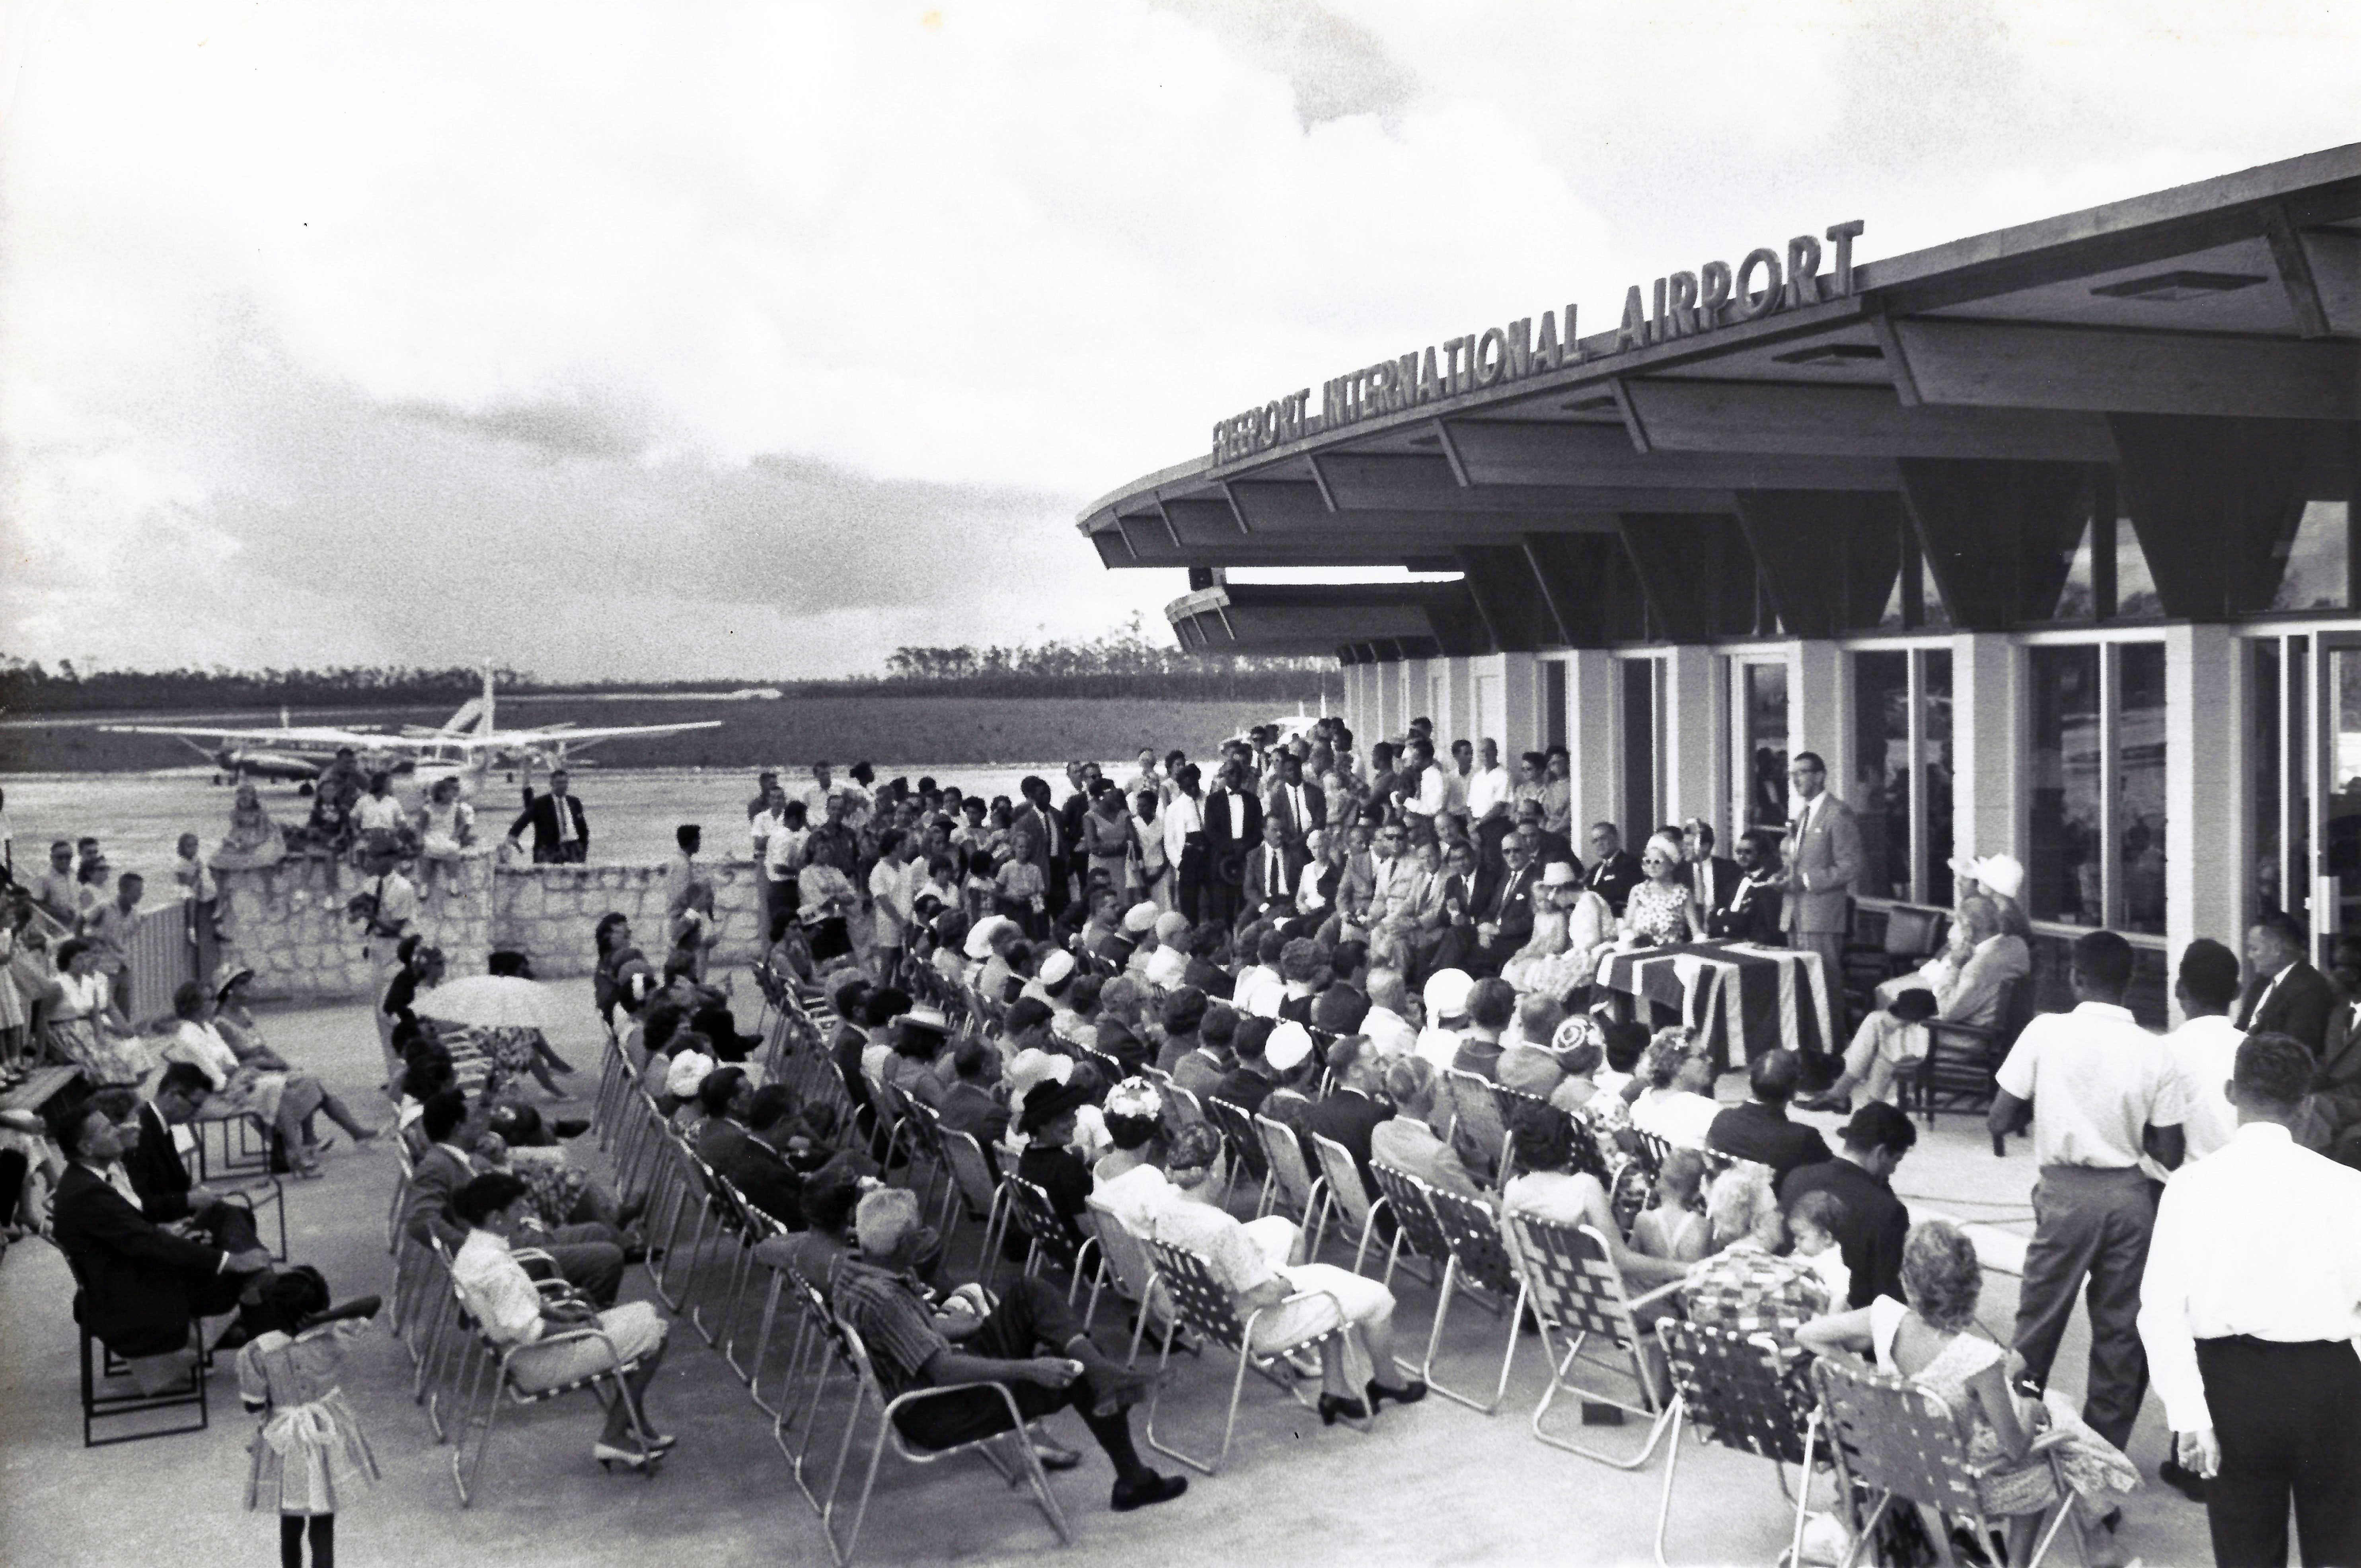 Dedication of Freeport Airport, 1960's